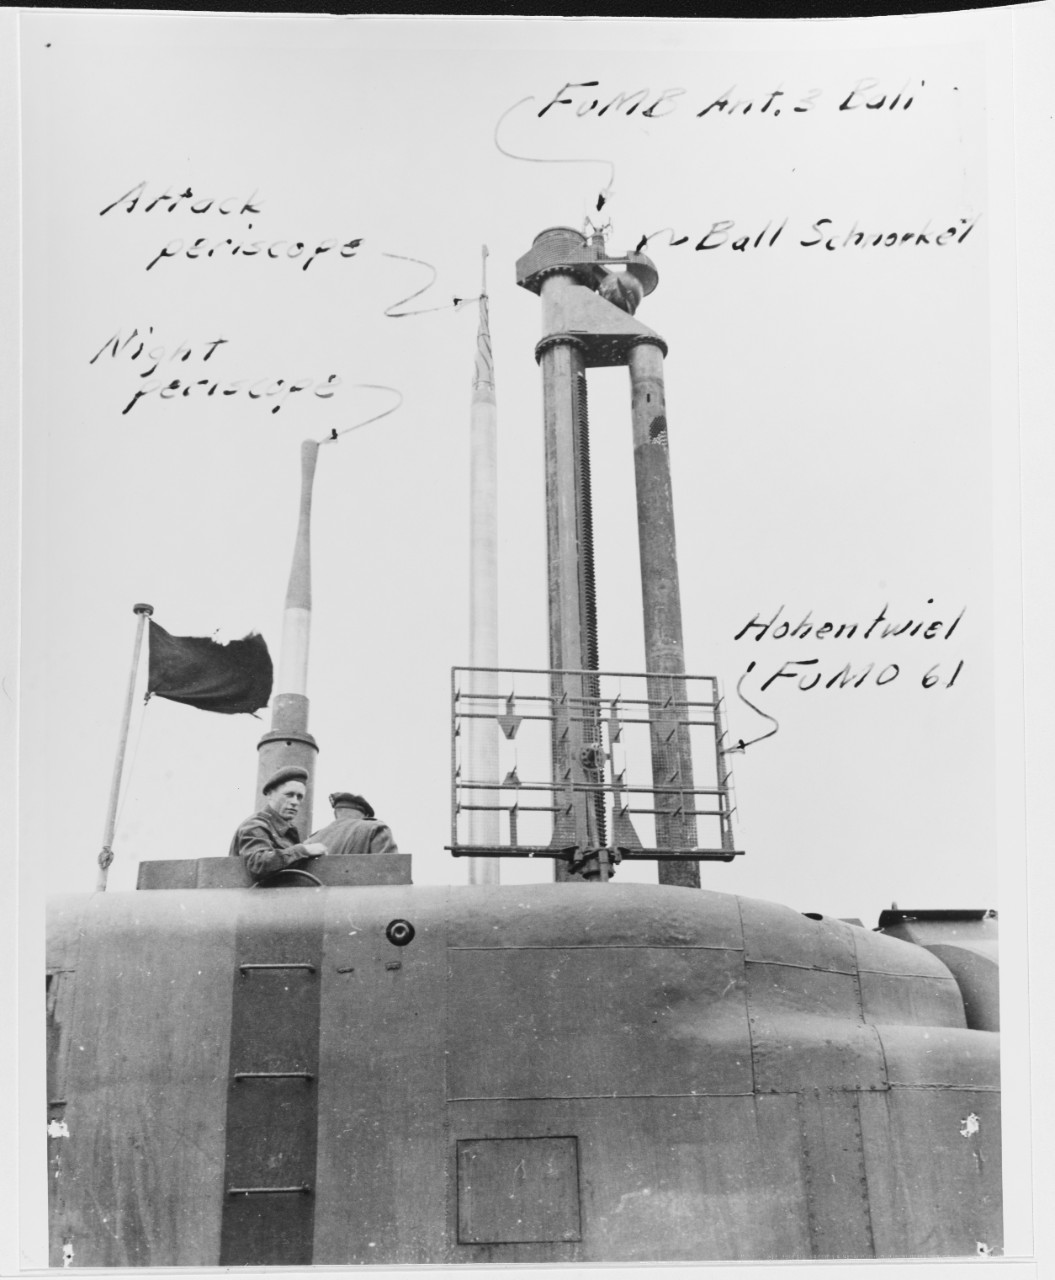 U-3008 (German type XXI U-boat)